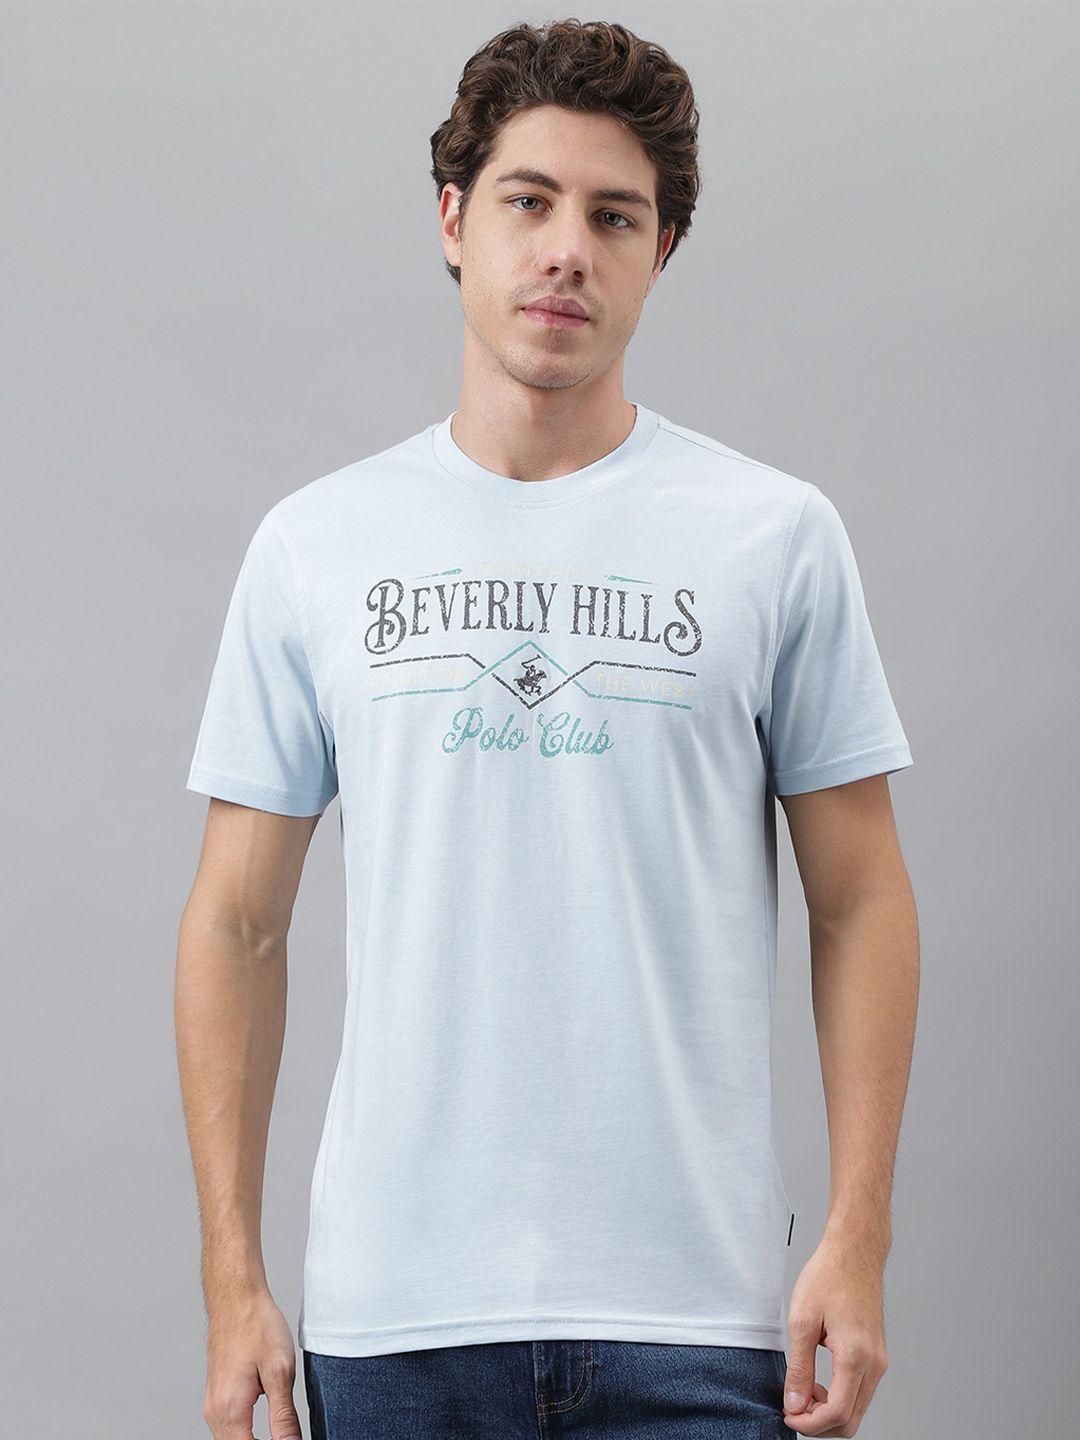 beverly hills polo club brand logo printed pure cotton t-shirt